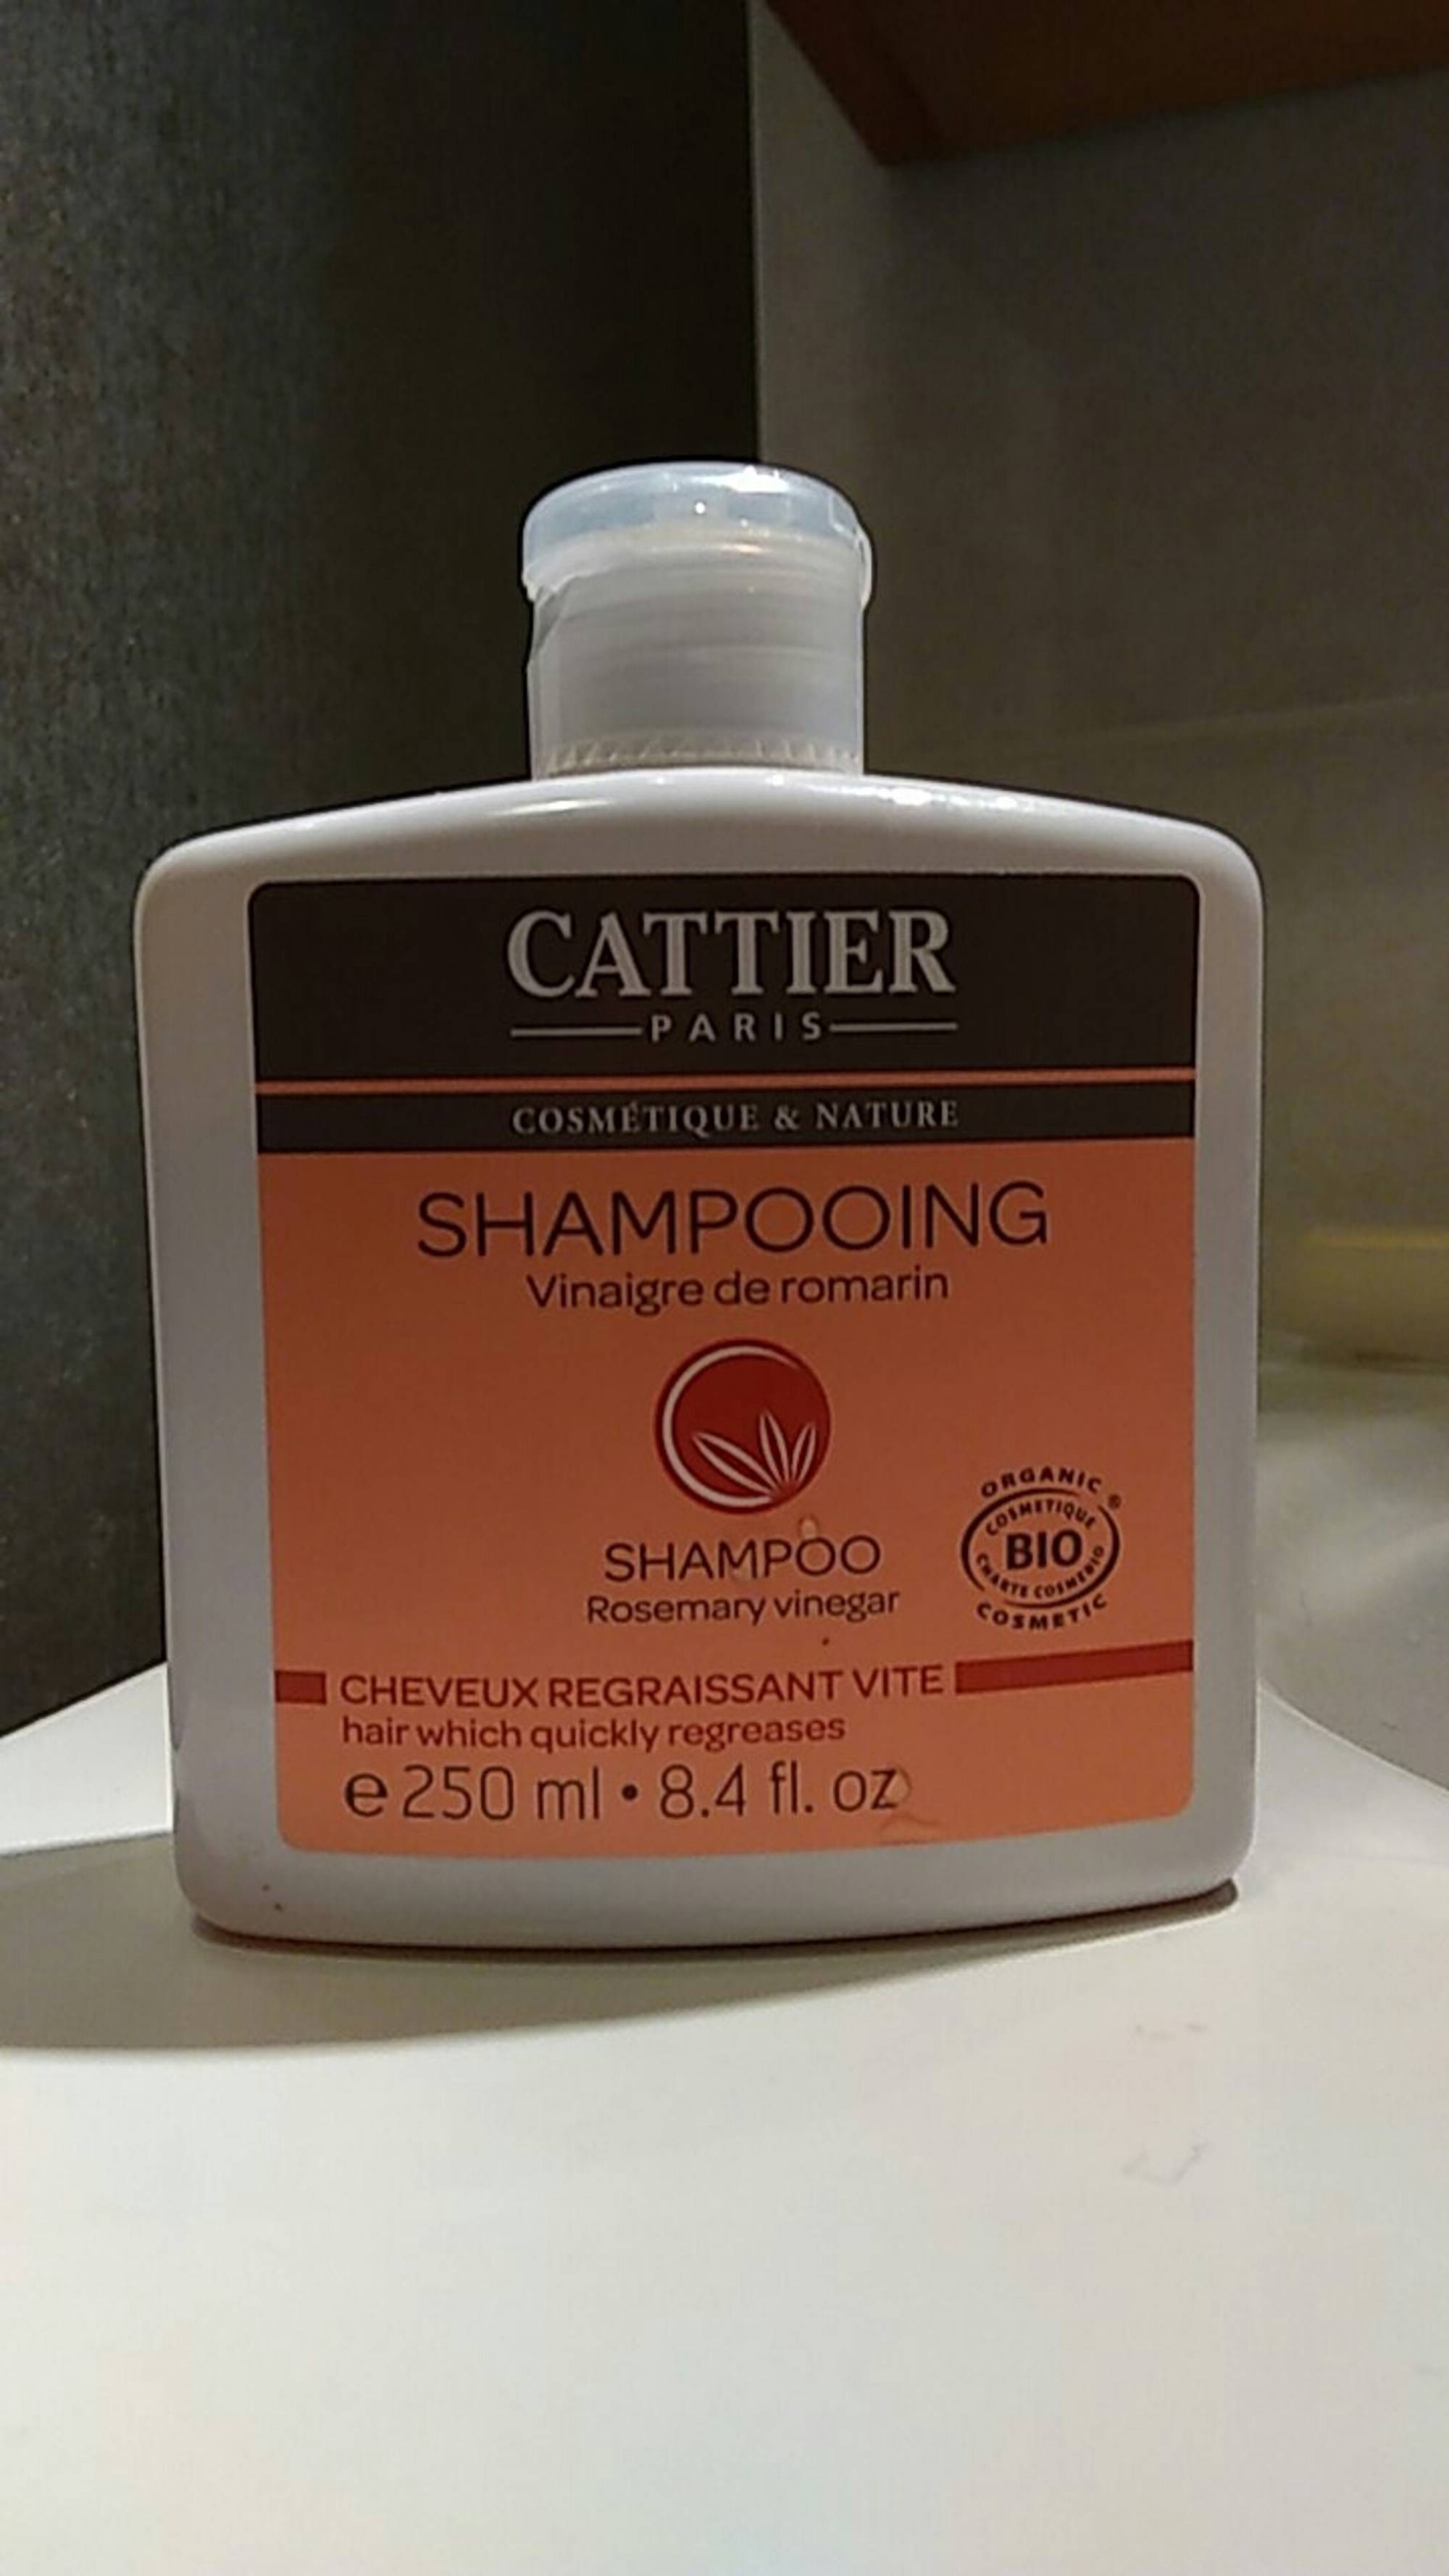 CATTIER PARIS - Shampooing vinaigre de romarin bio